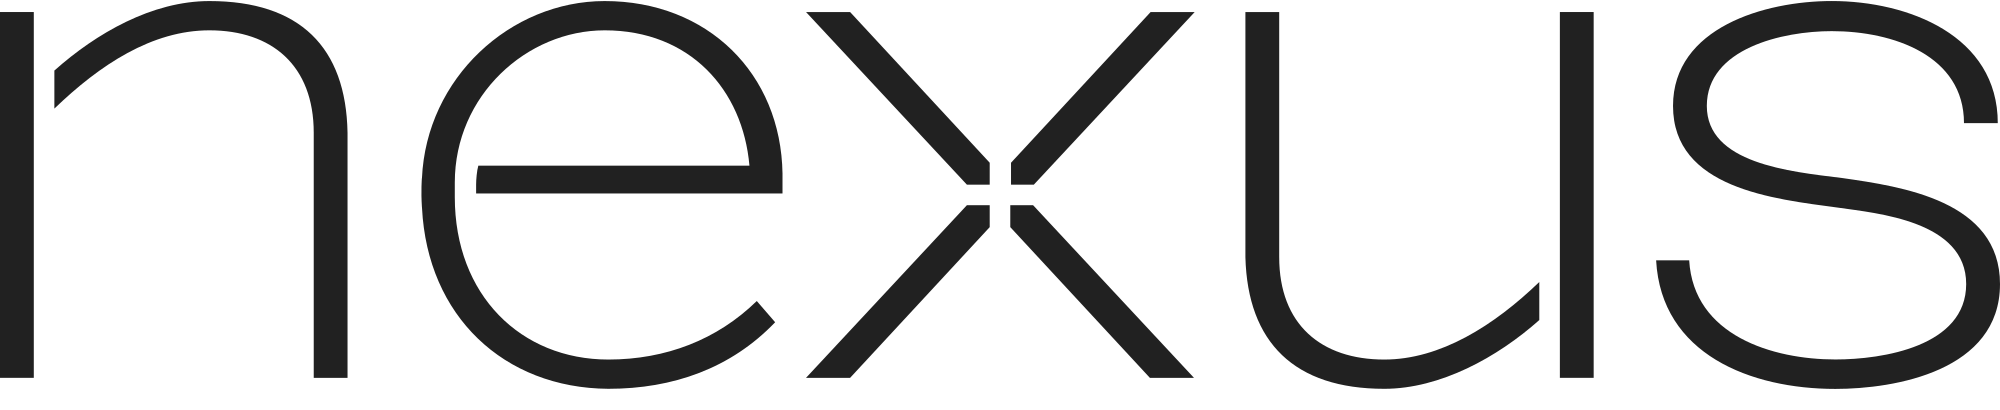 Nexus Logo - File:Nexus logo 2015.svg - Wikimedia Commons